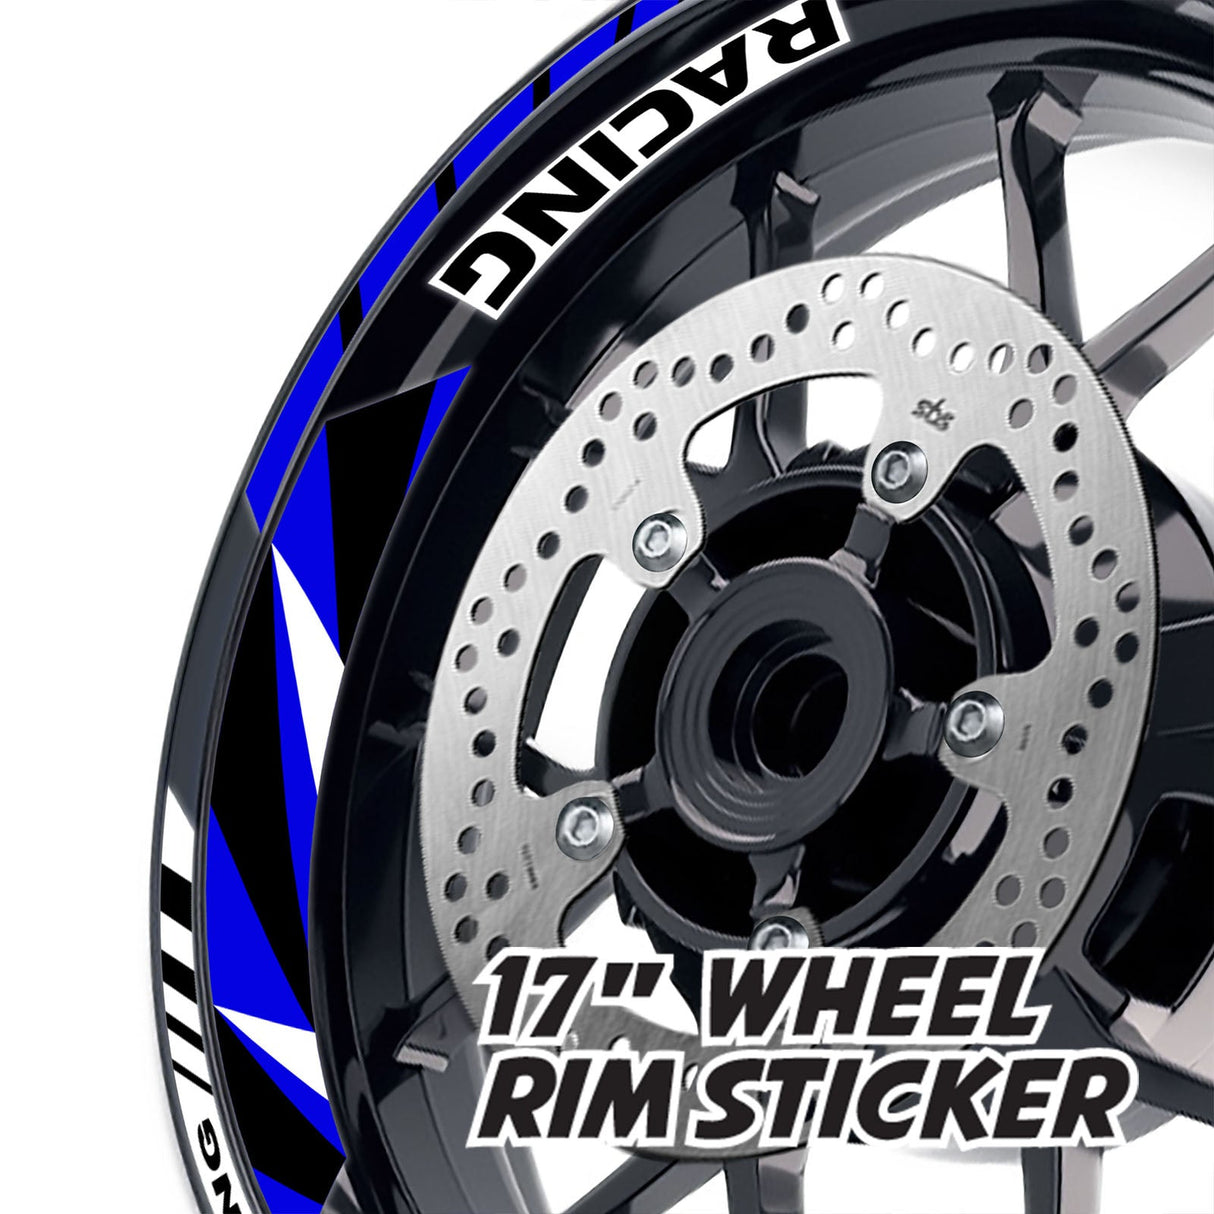 StickerBao Orange 17 inch GP12 Platinum Inner Edge Rim Sticker Universal Motorcycle Rim Wheel Decal Racing For Suzuki